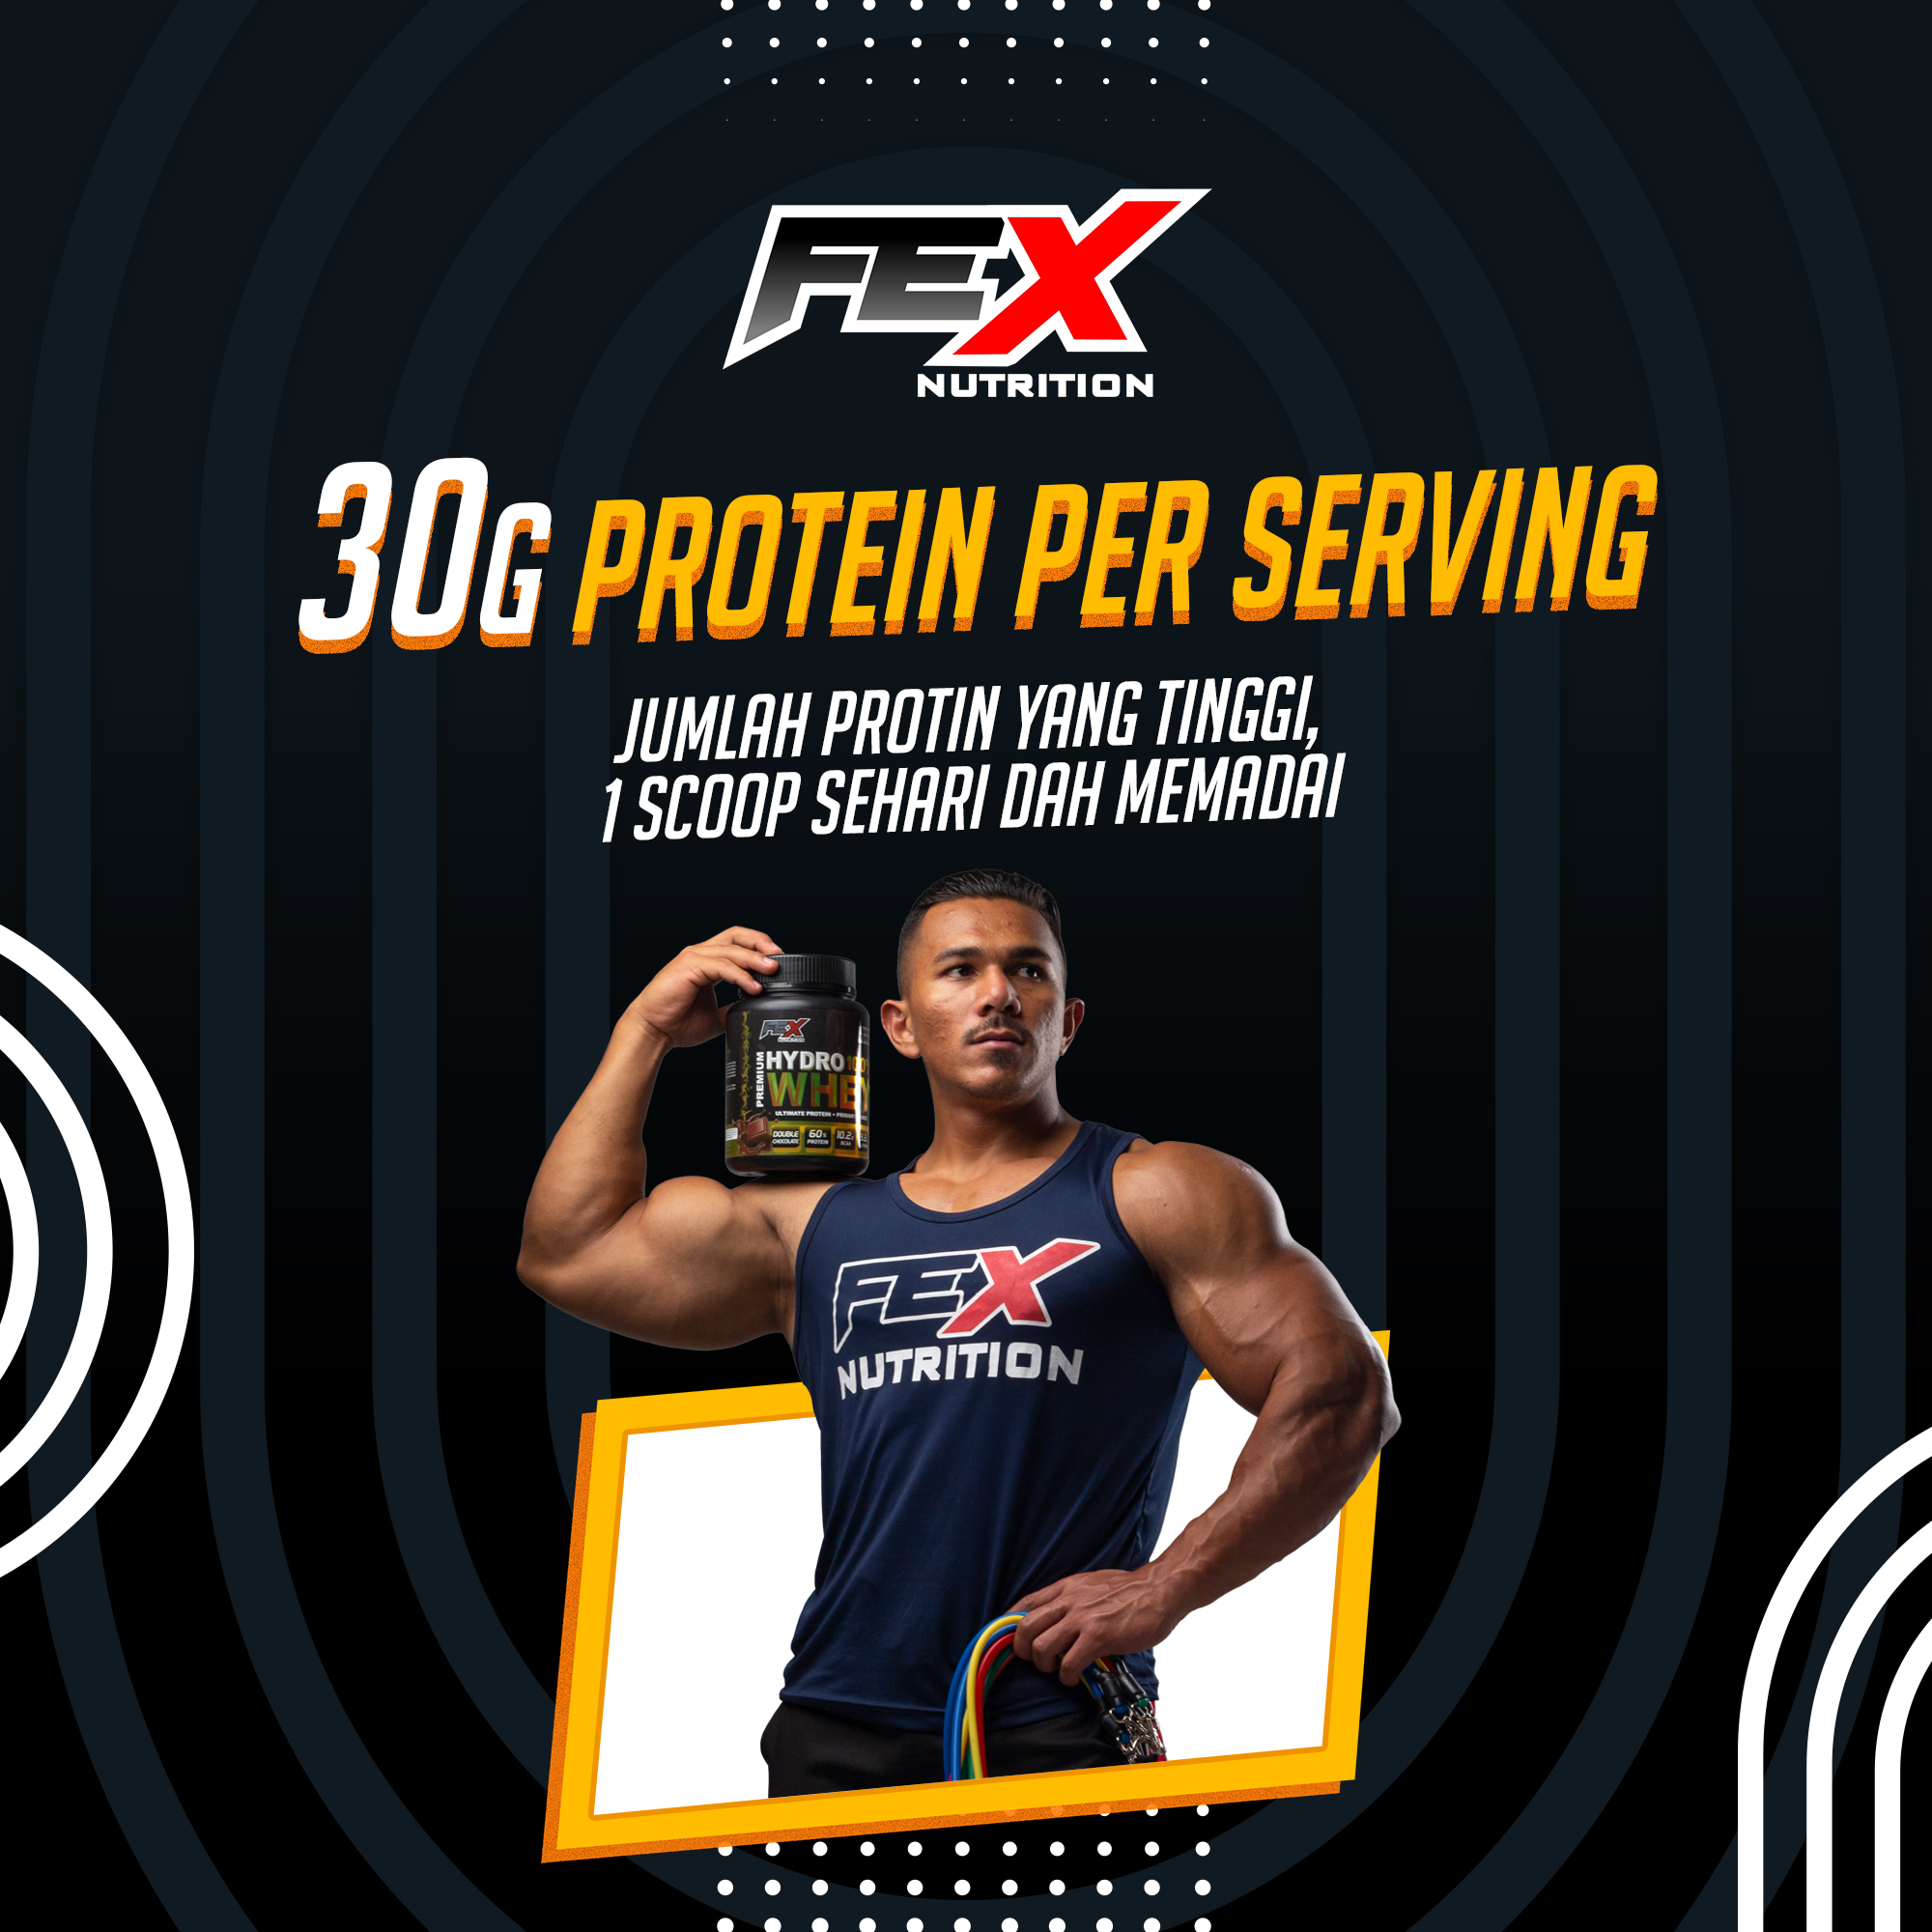 30g protein per serving